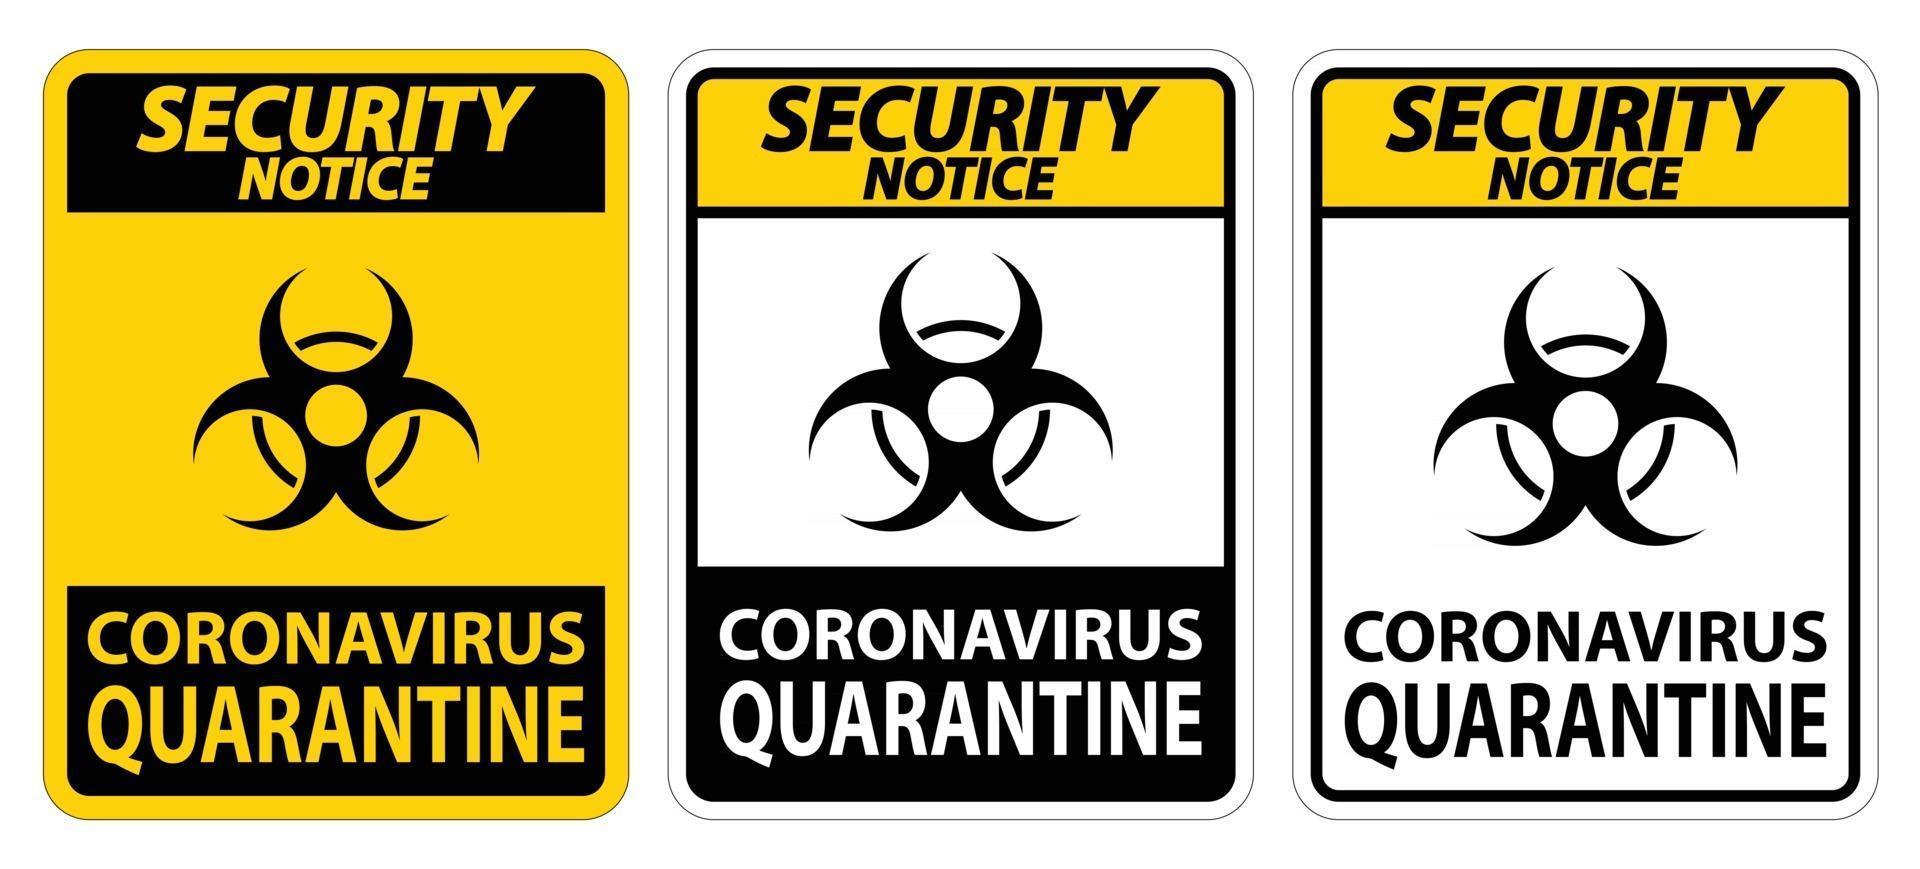 Security Notice Coronavirus Quarantine Sign Isolate On White Background,Vector Illustration EPS.10 vector